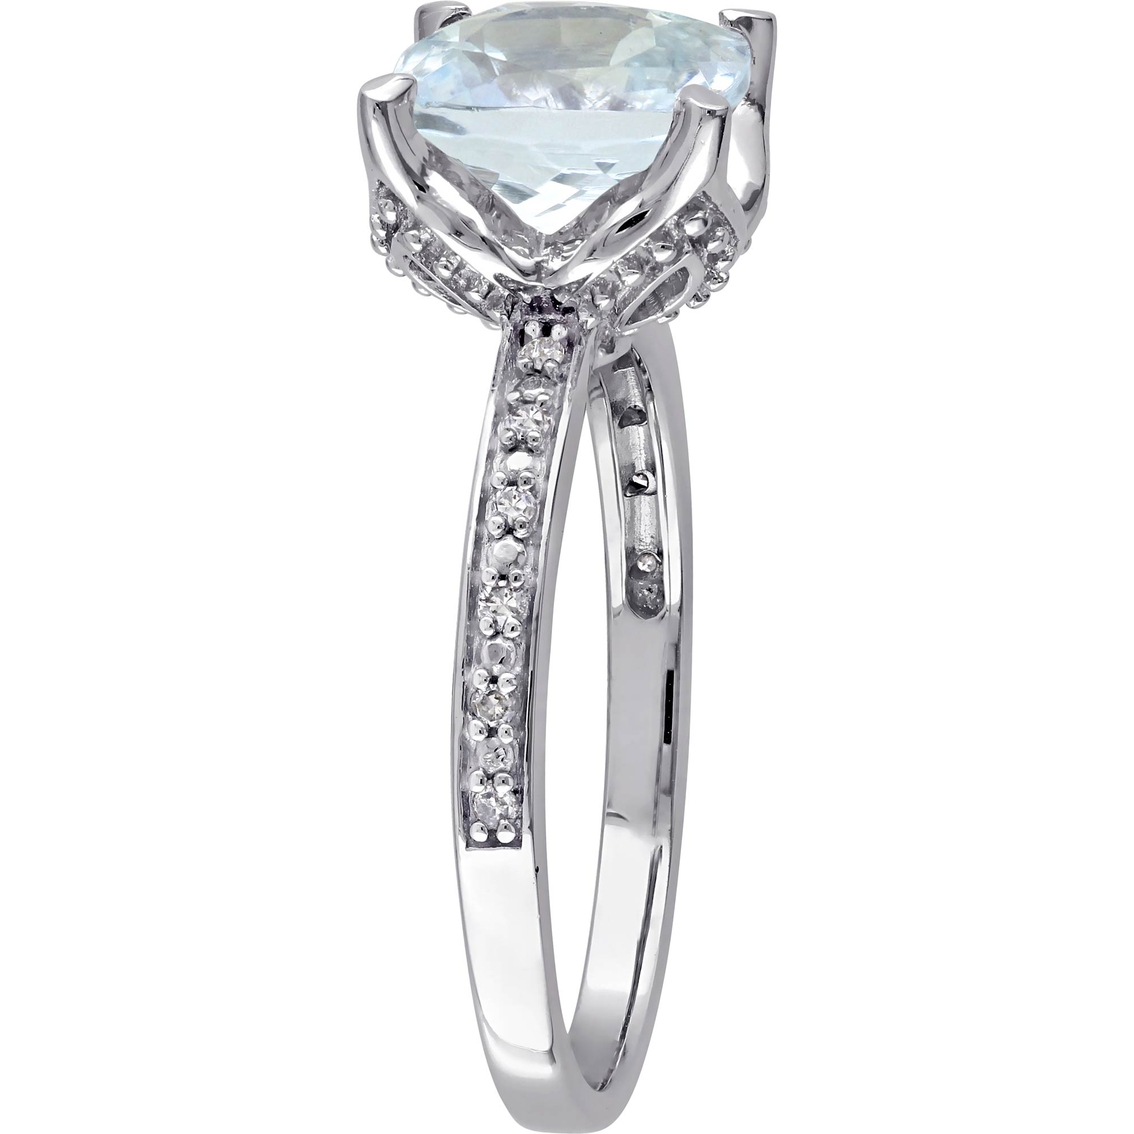 Sofia B. Aquamarine and Diamond Accent Ring in 10K White Gold - Image 2 of 3